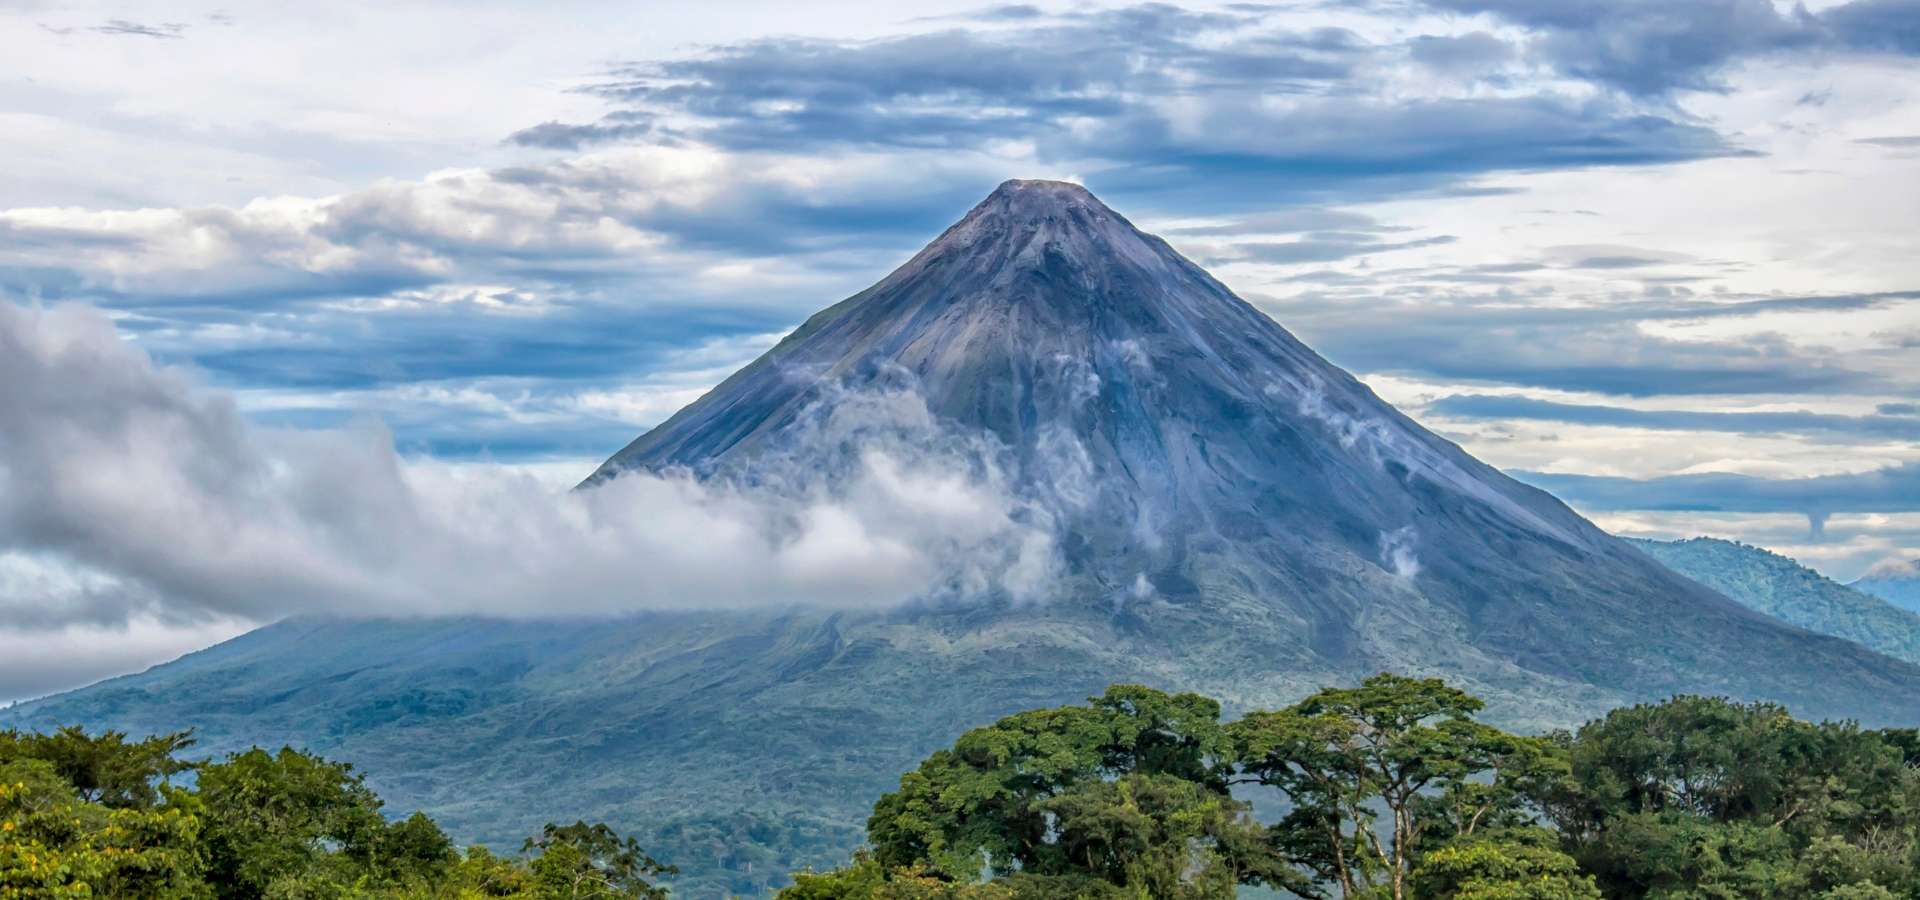 Costa Rican kiertomatka - Arenalin tulivuori